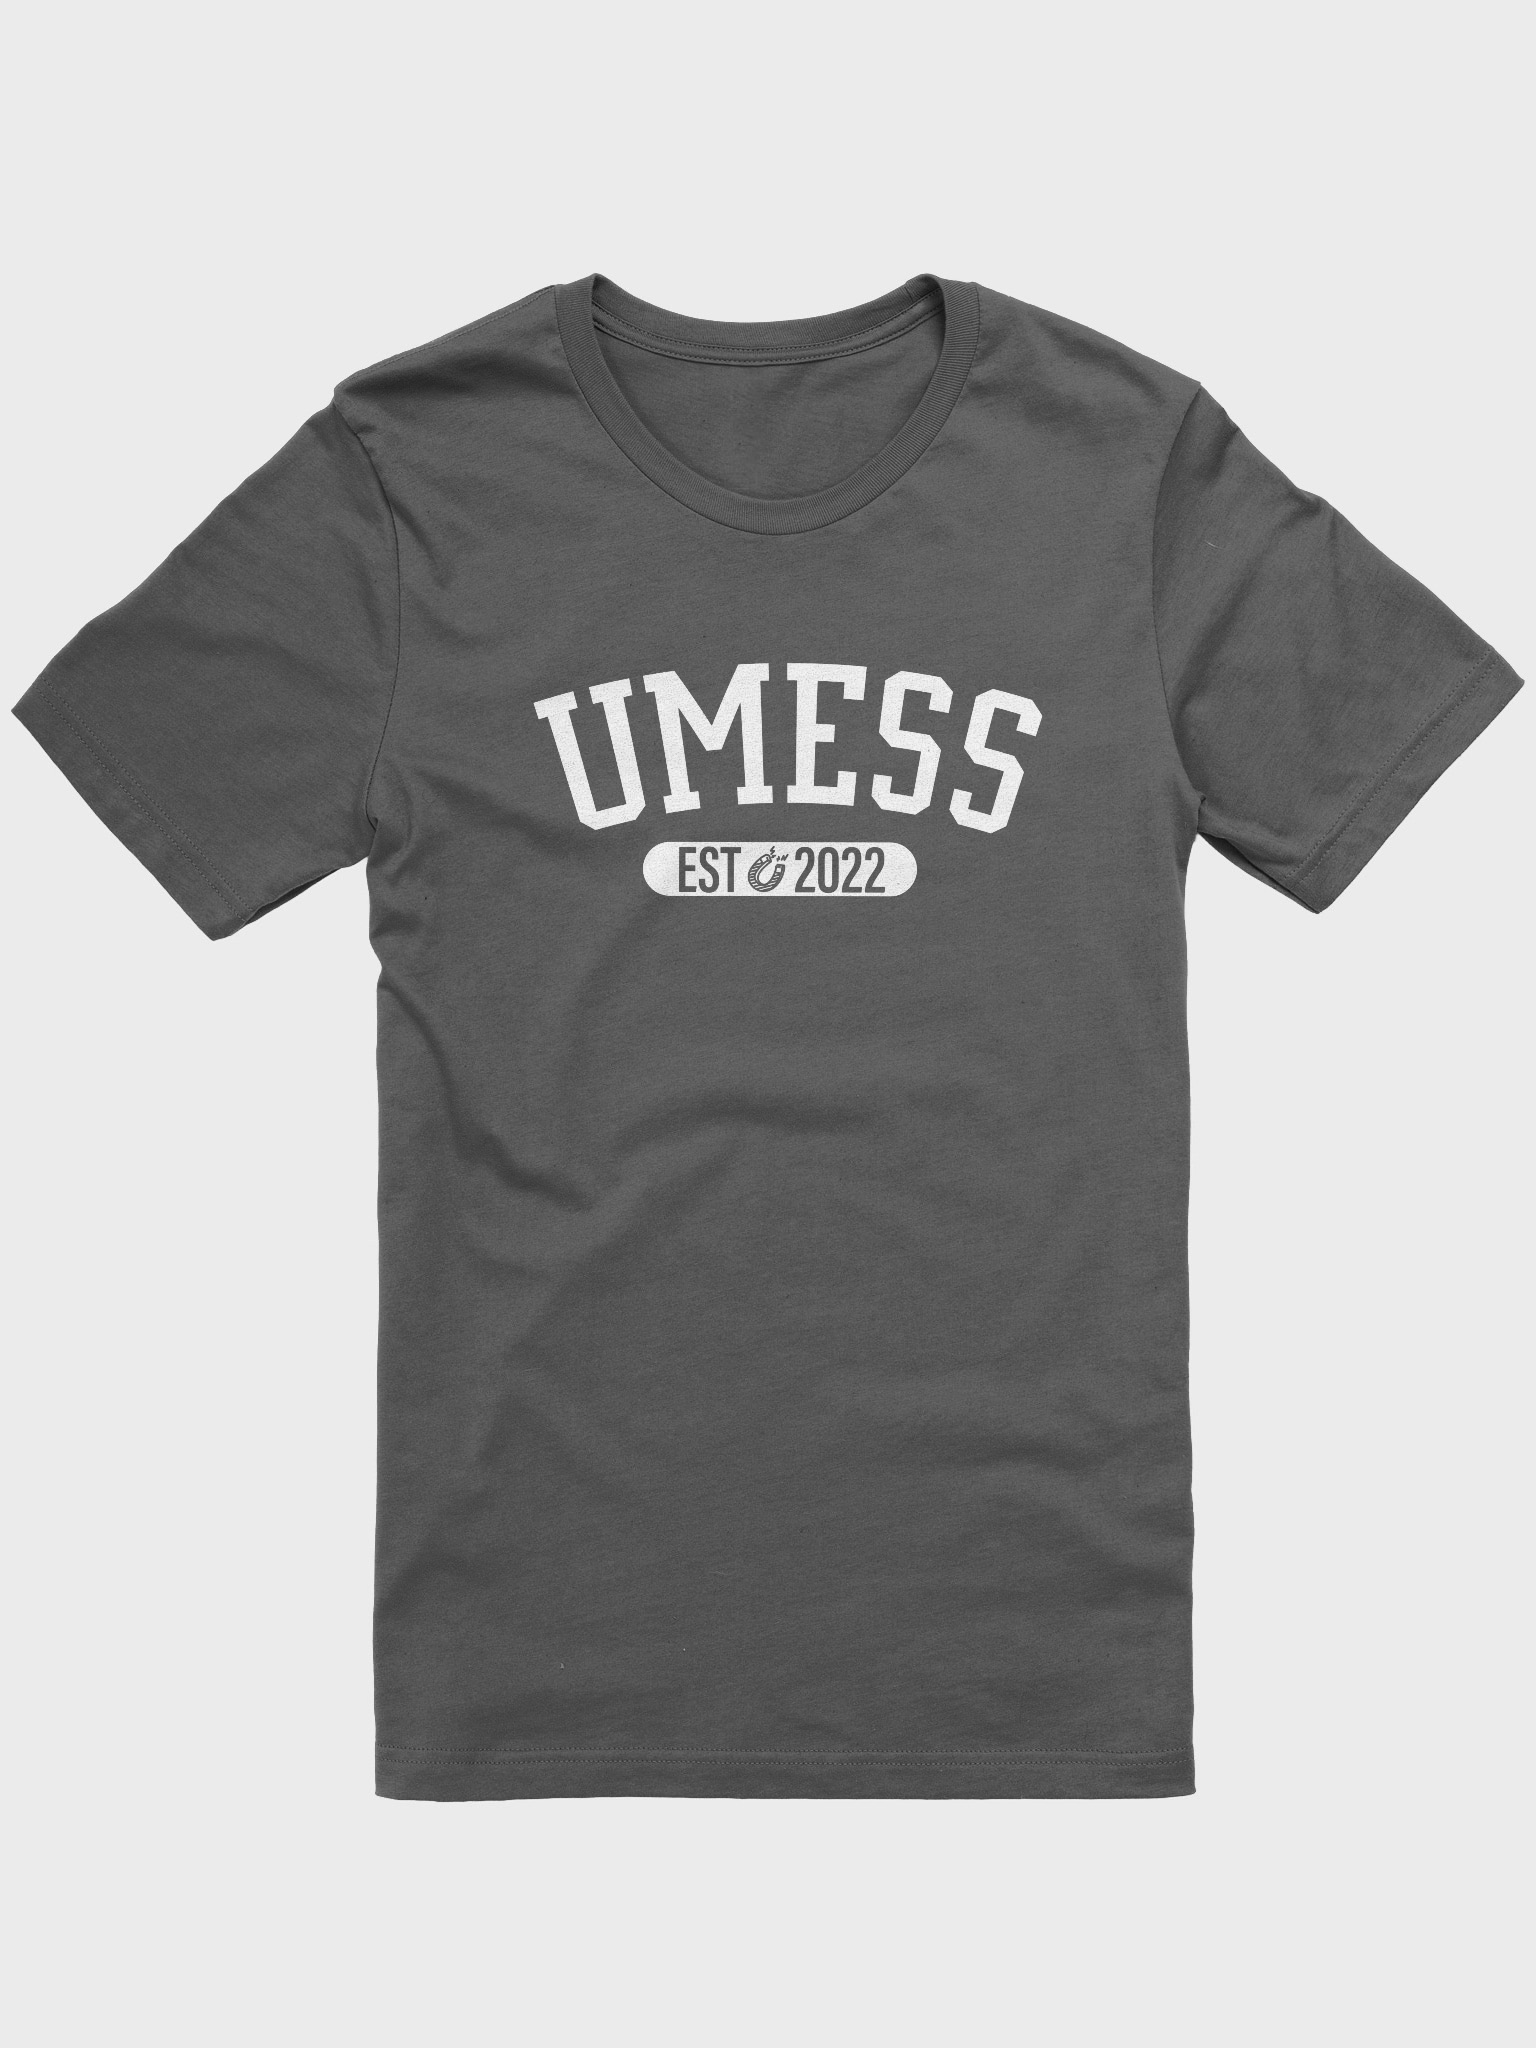 Mess Magnets UMESS (White) - Unisex Super Soft Cotton T-Shirt